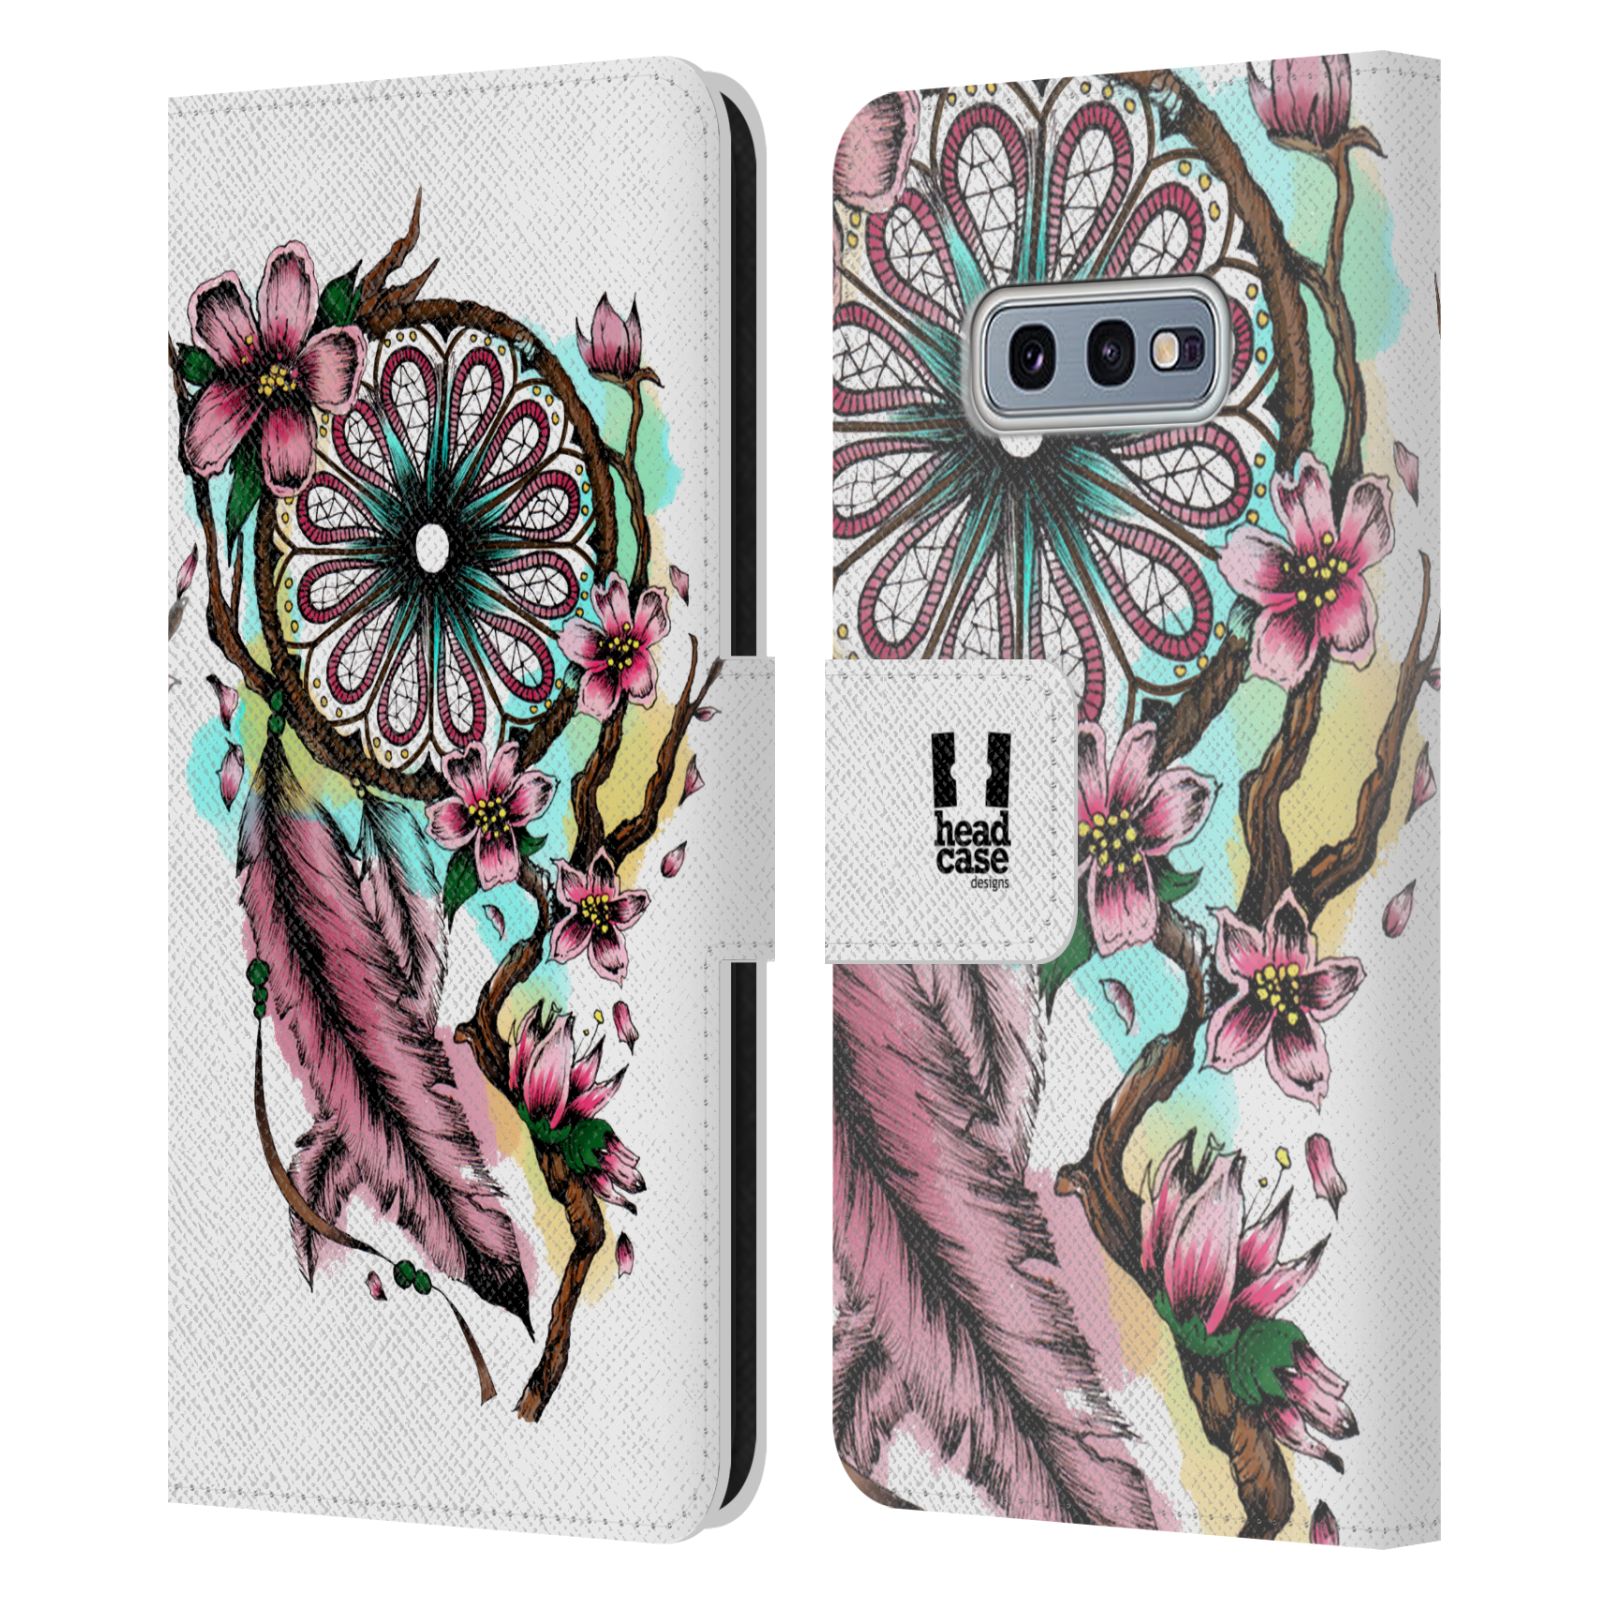 Pouzdro pro mobil Samsung Galaxy S10e  - Květinový vzor lapač snů